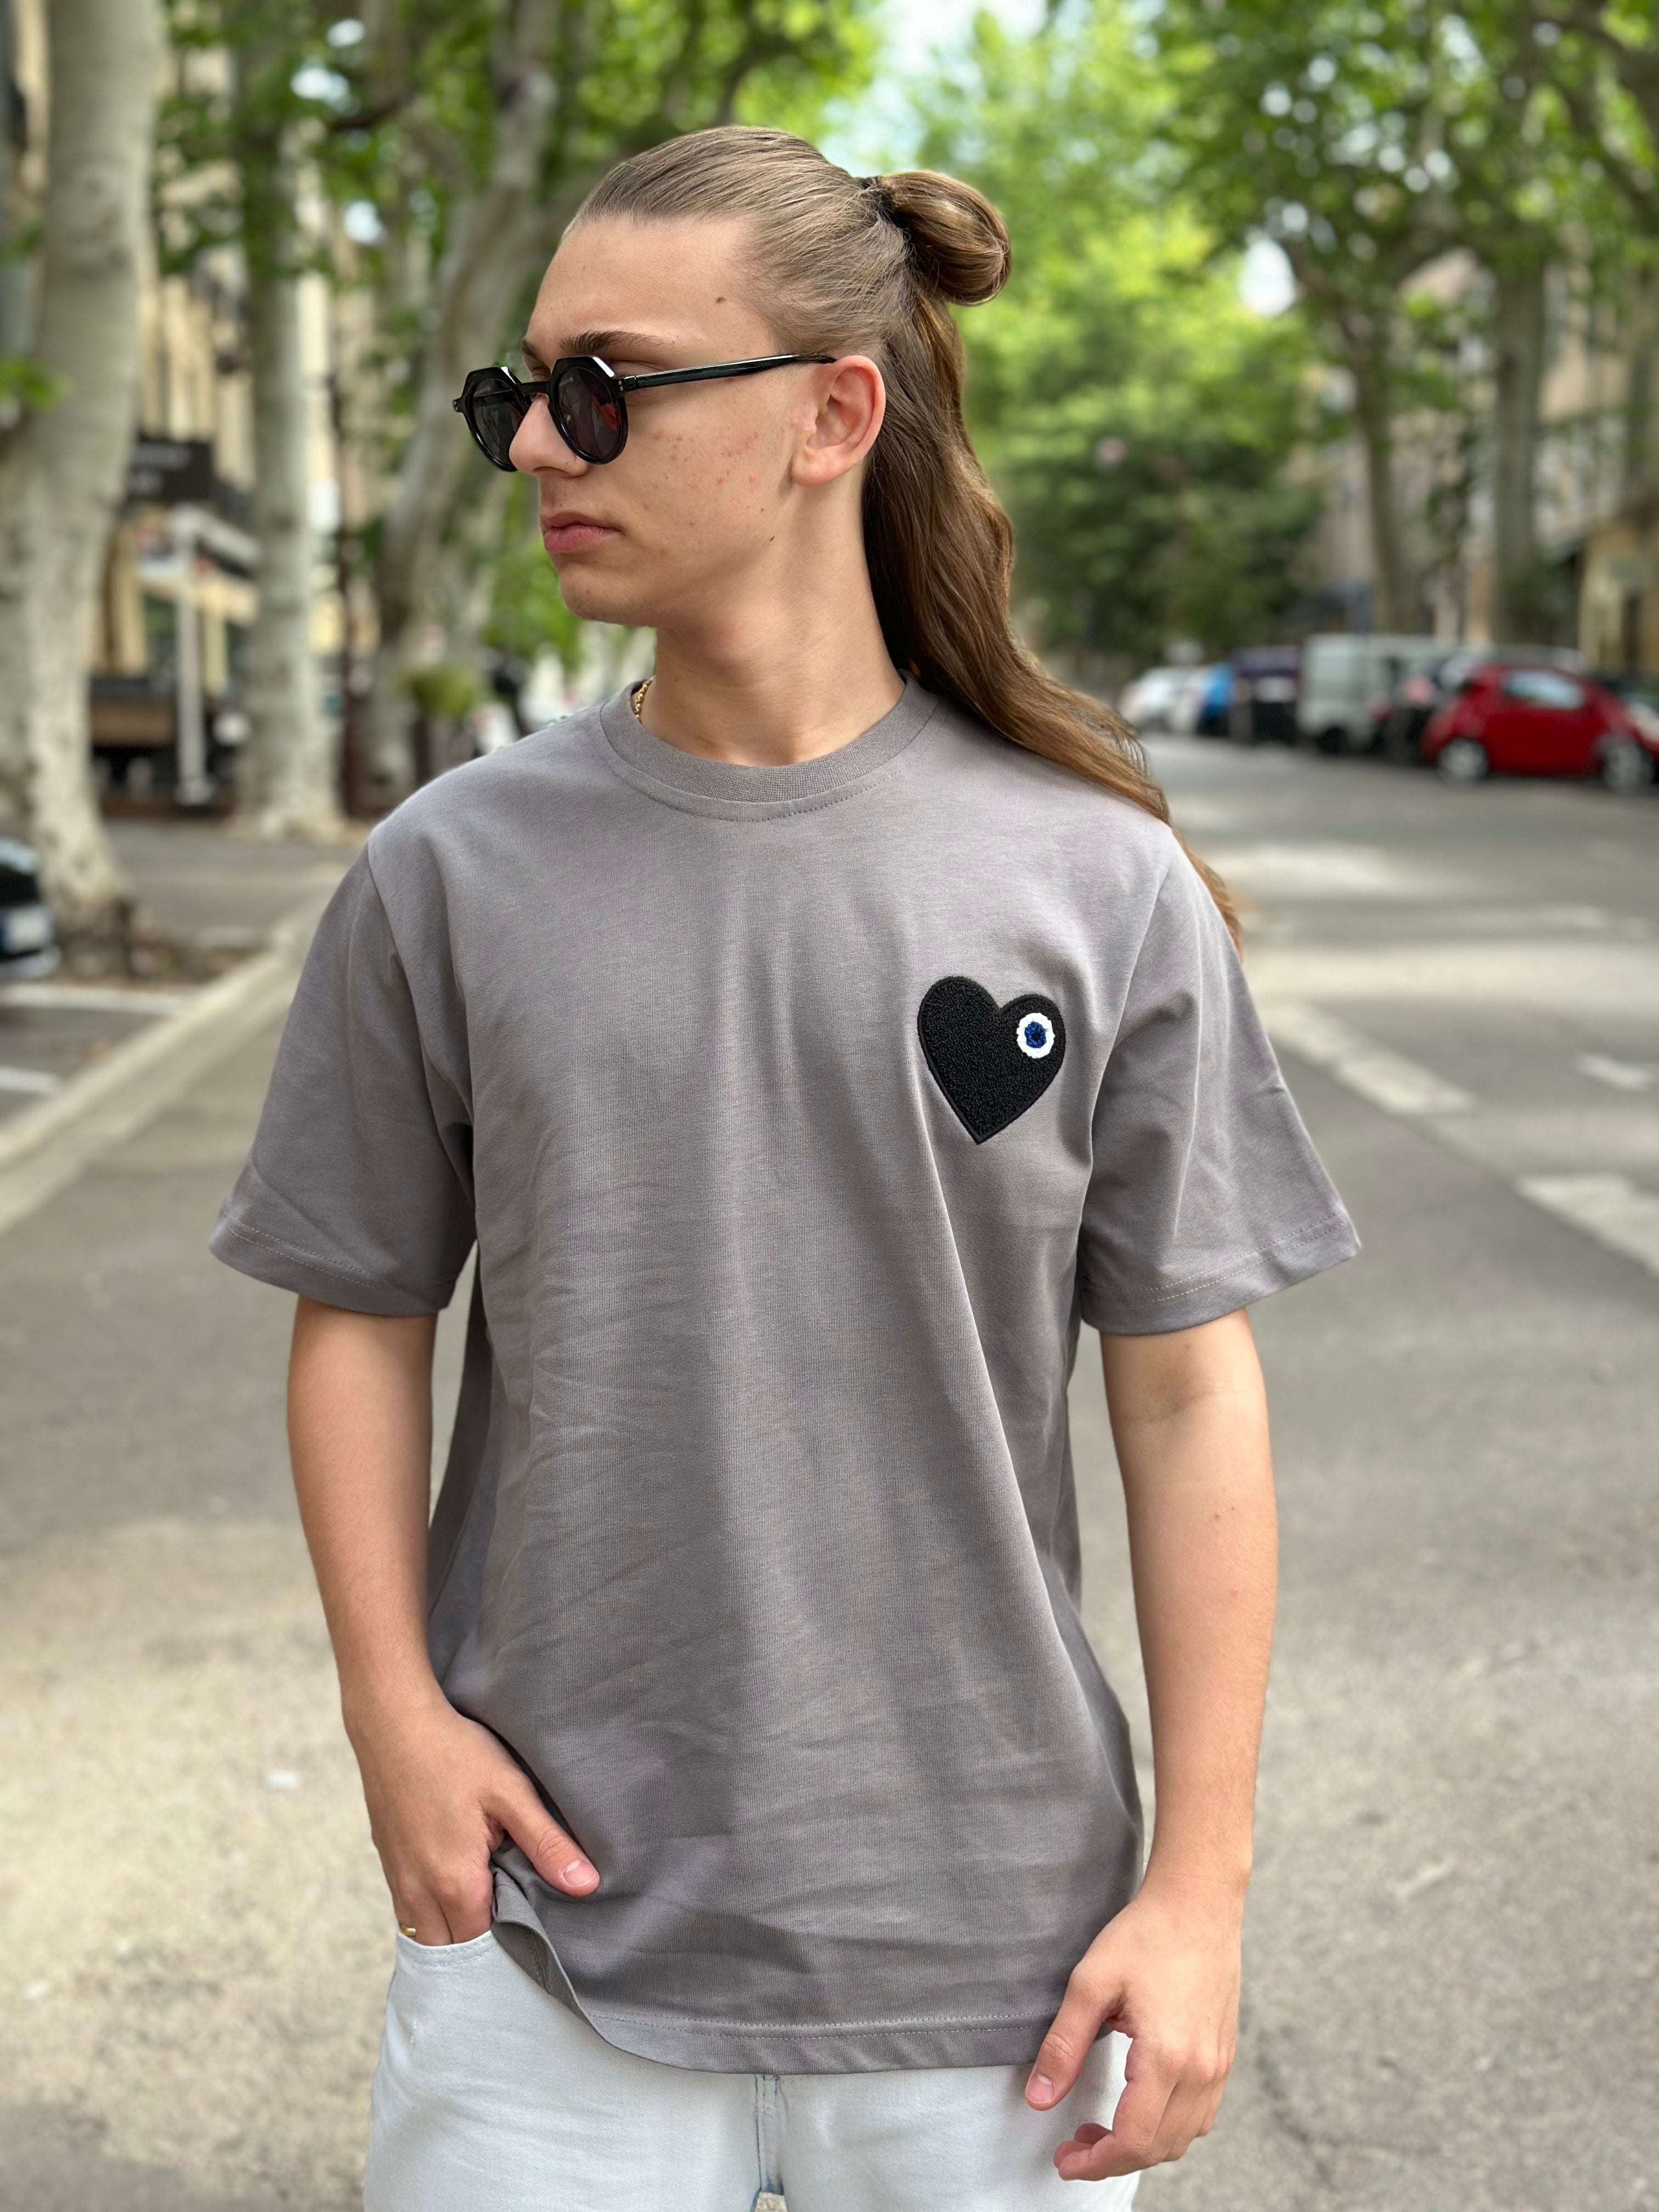 ADJ - Gray t-shirt with black heart